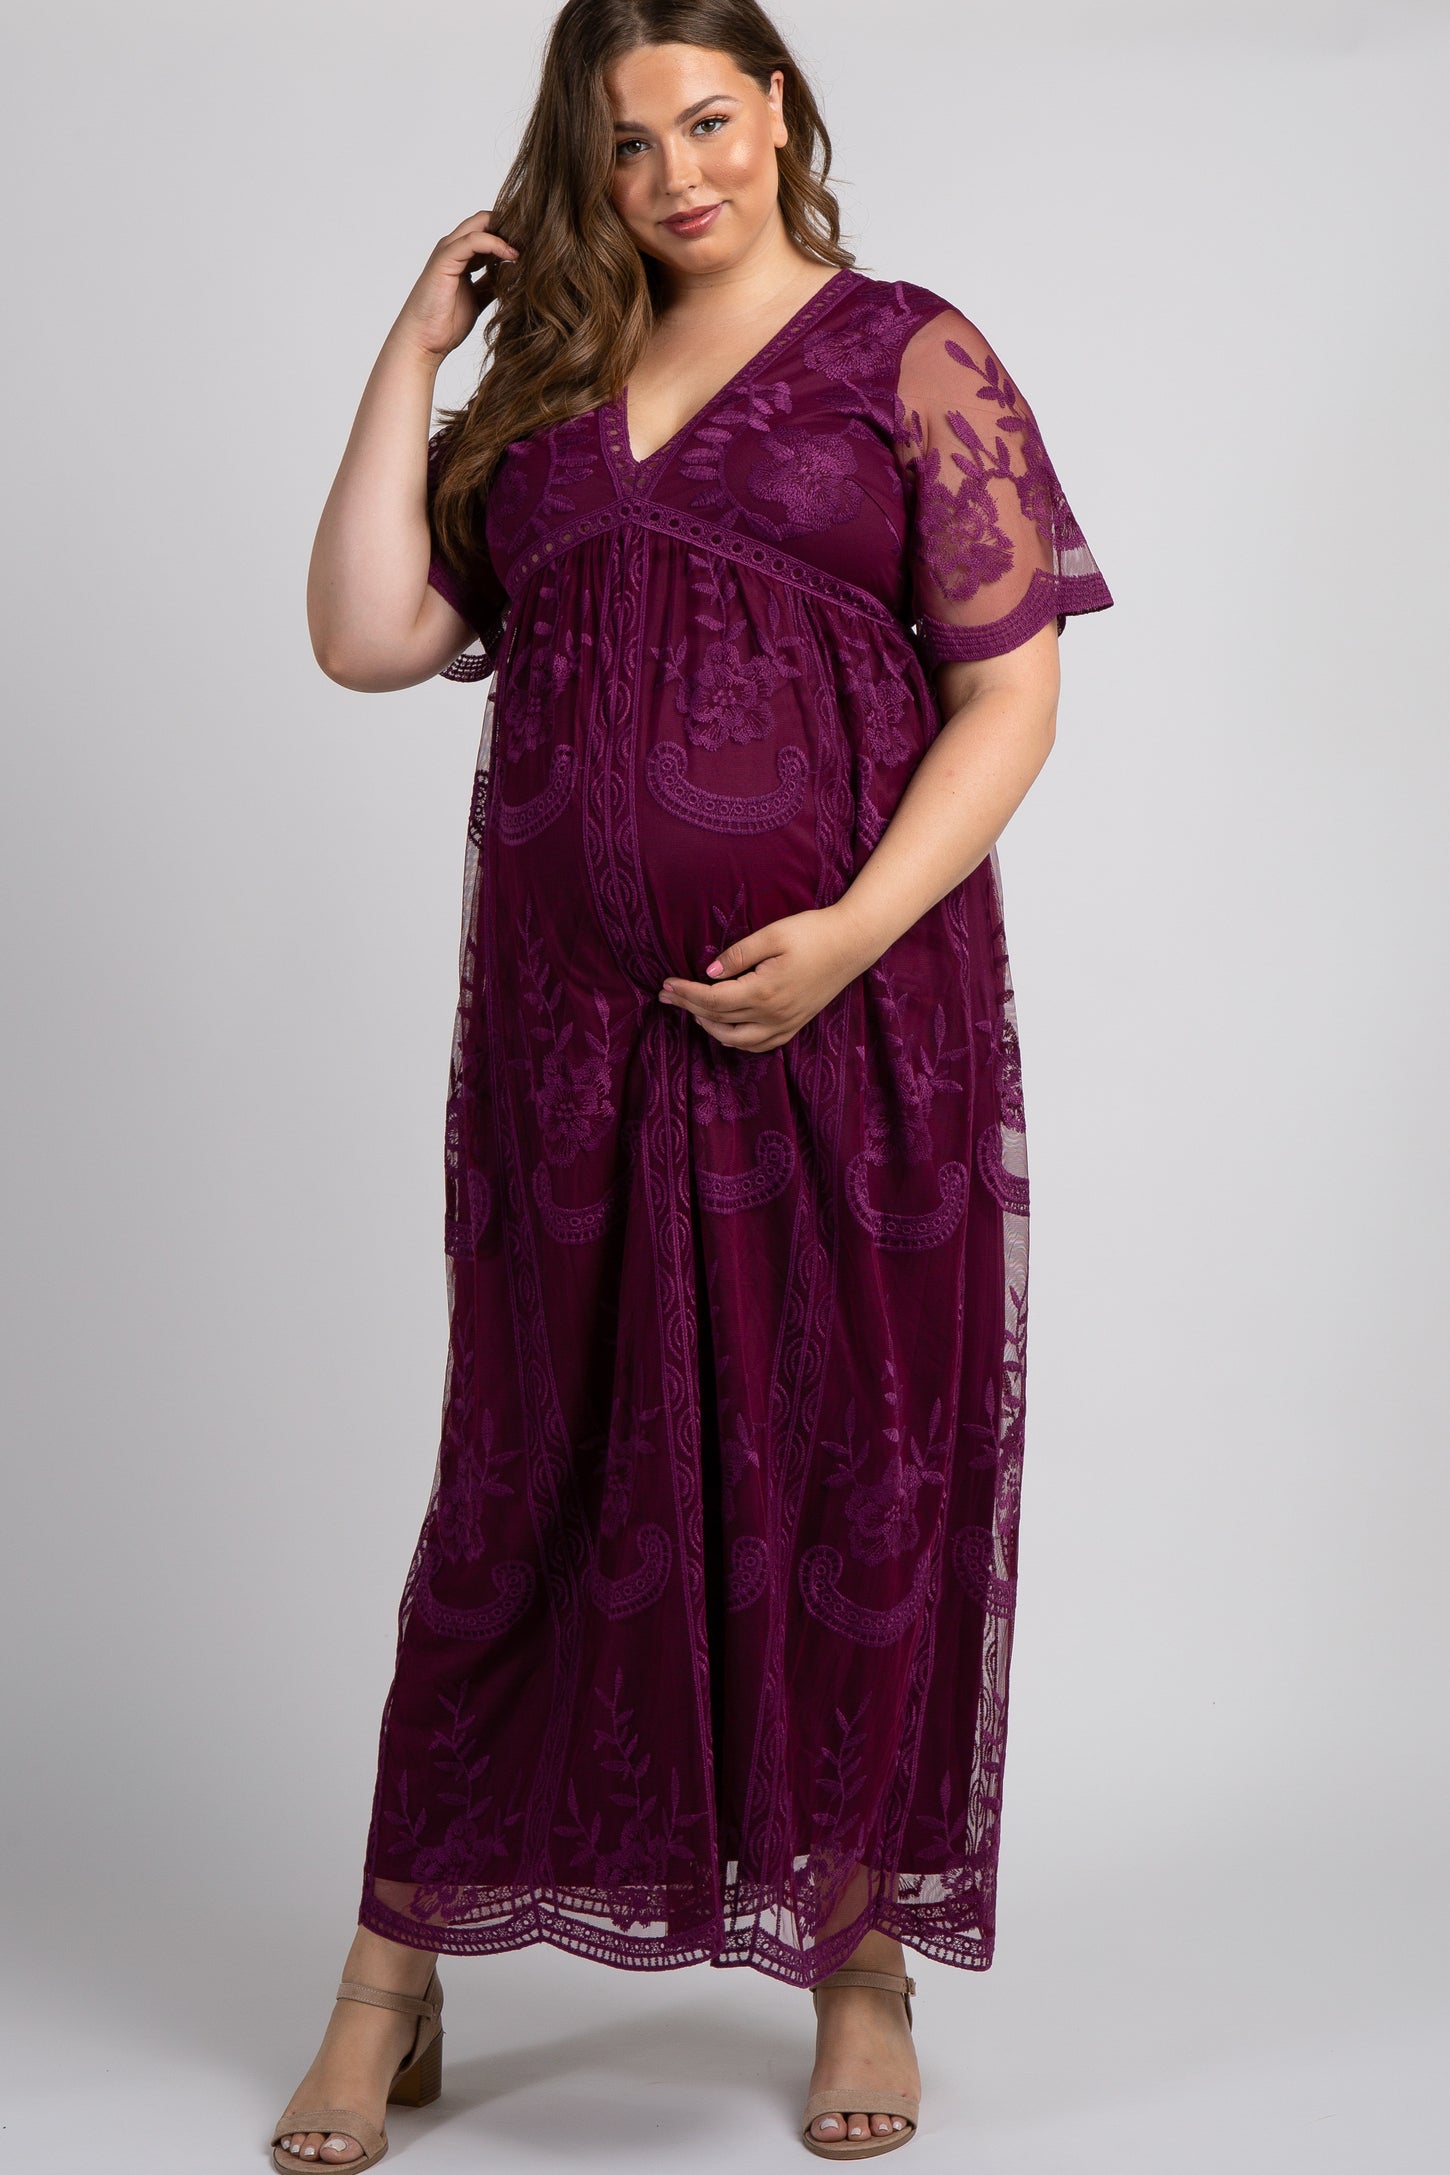 Dark Burgundy Lace Mesh Overlay Plus Maternity Maxi Dress